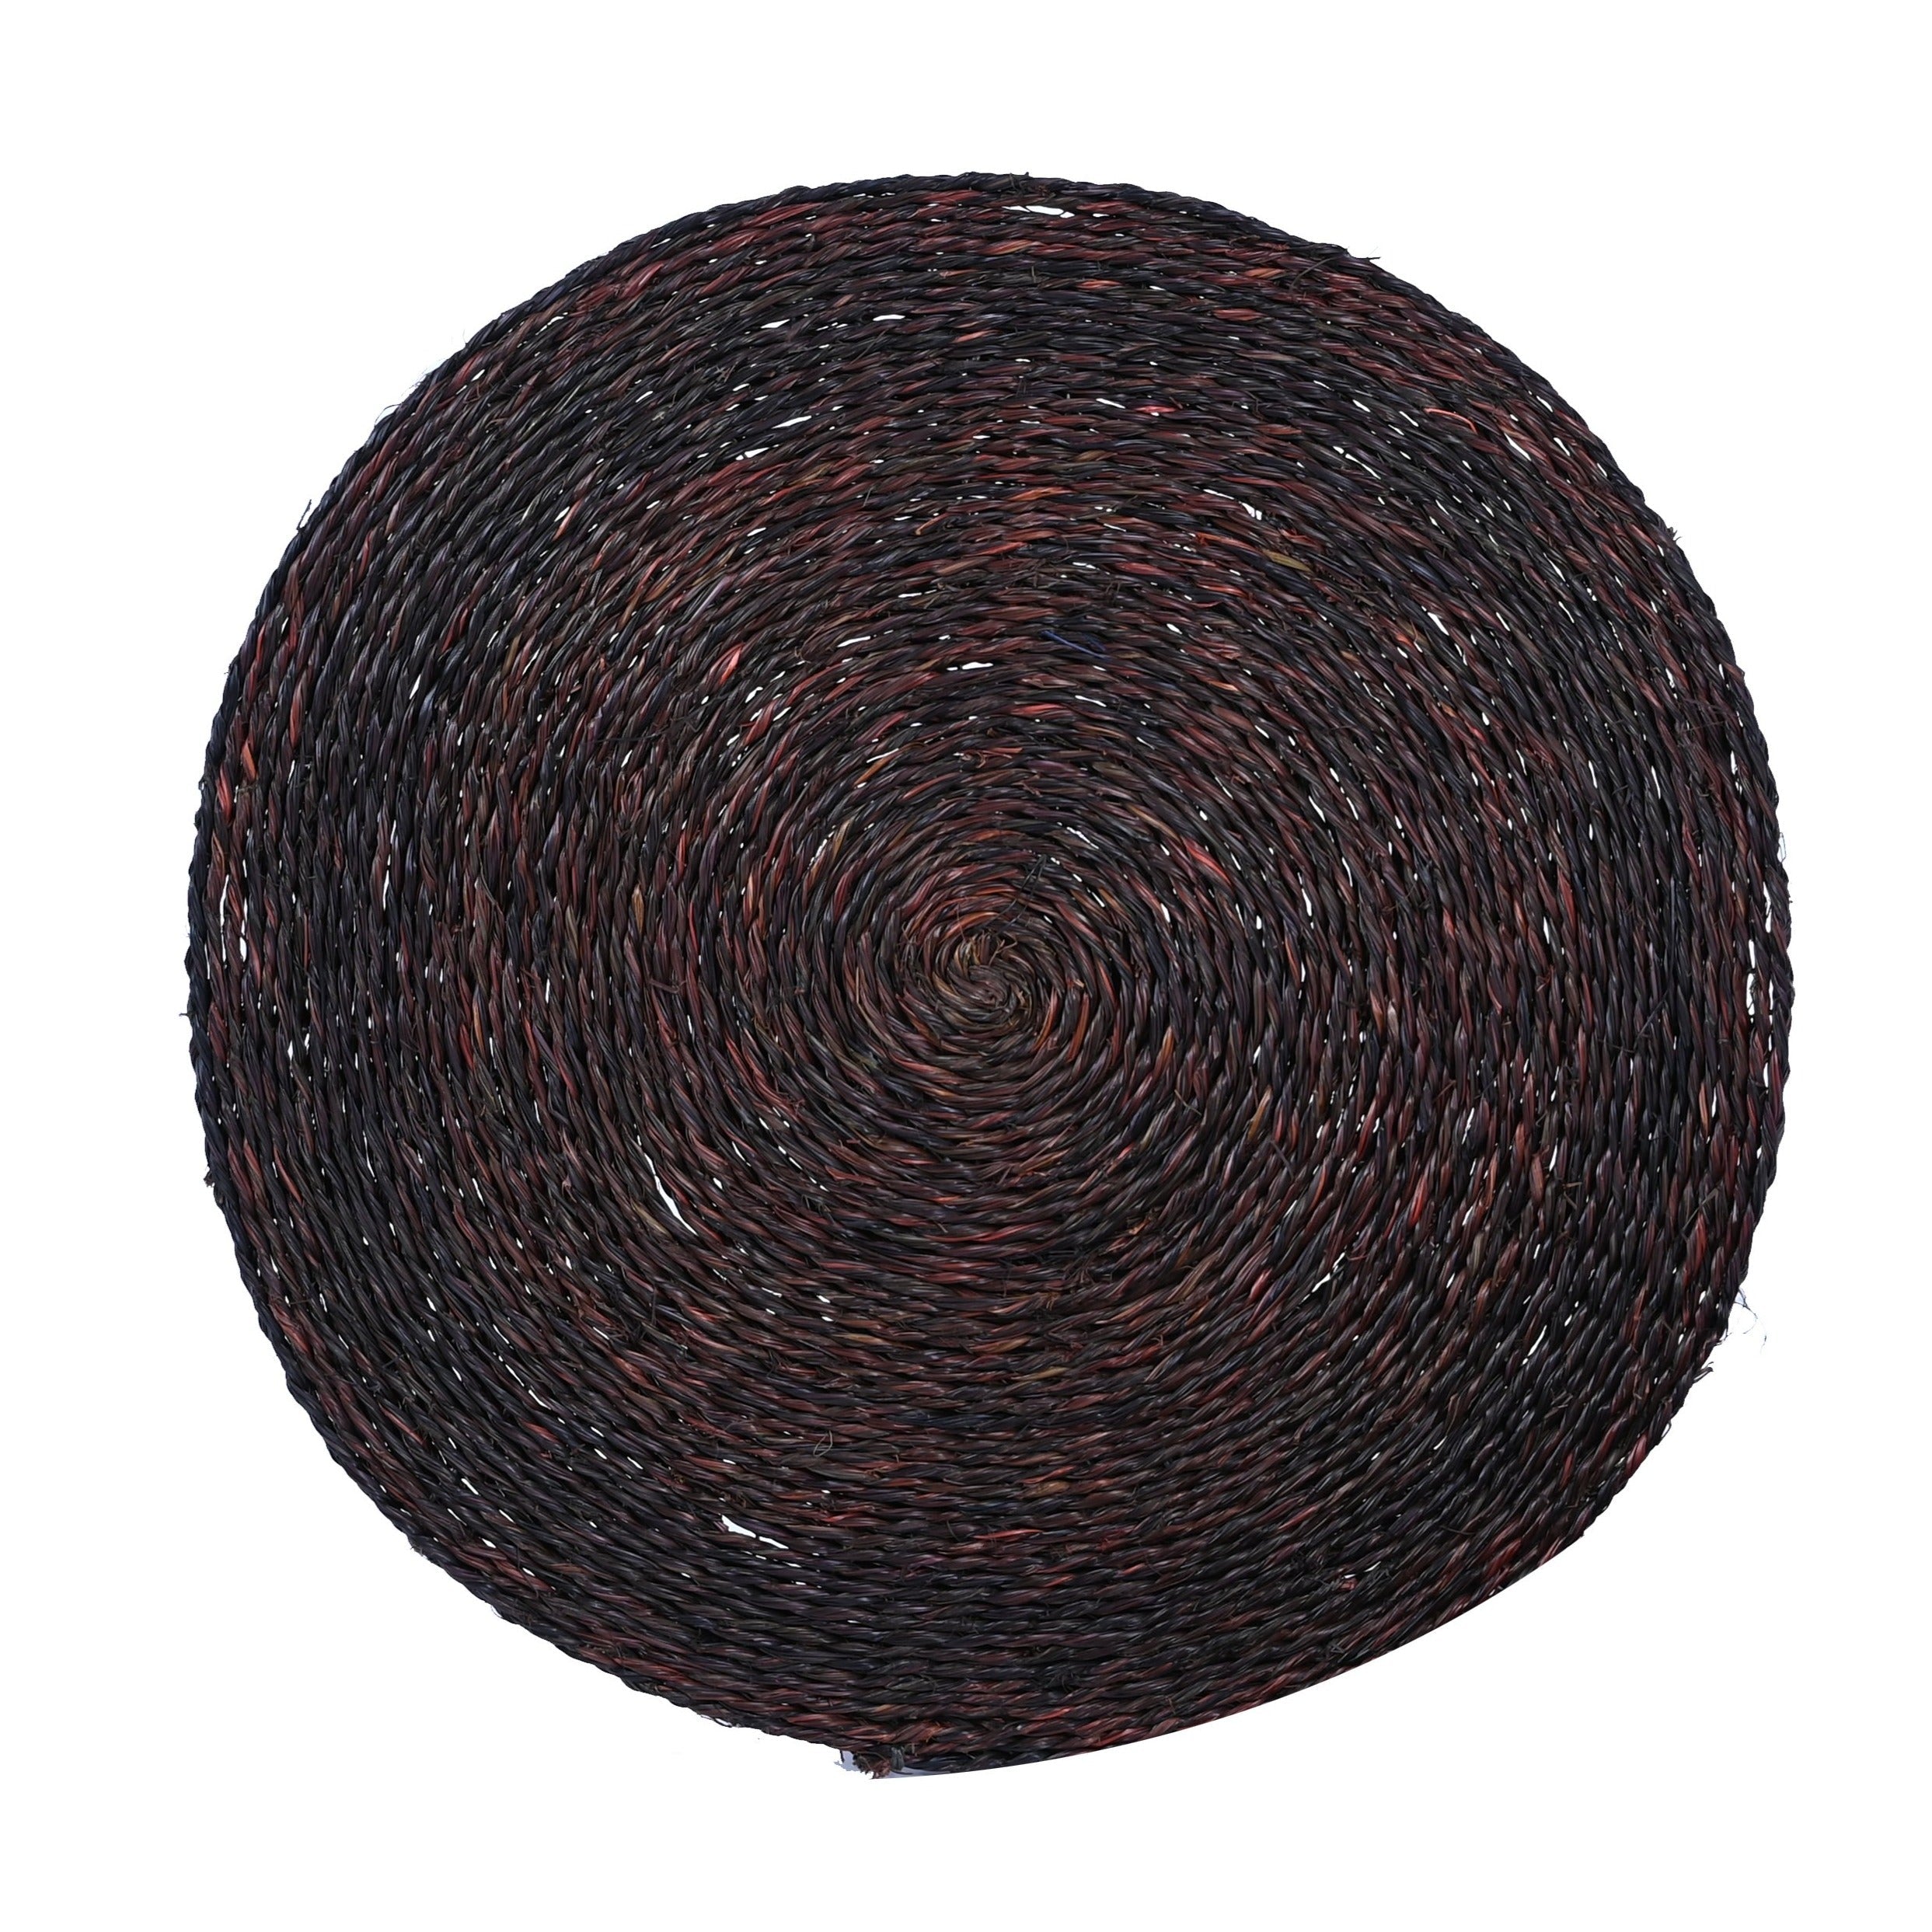 Chocolate Lutindiz Grass Woven Placemats